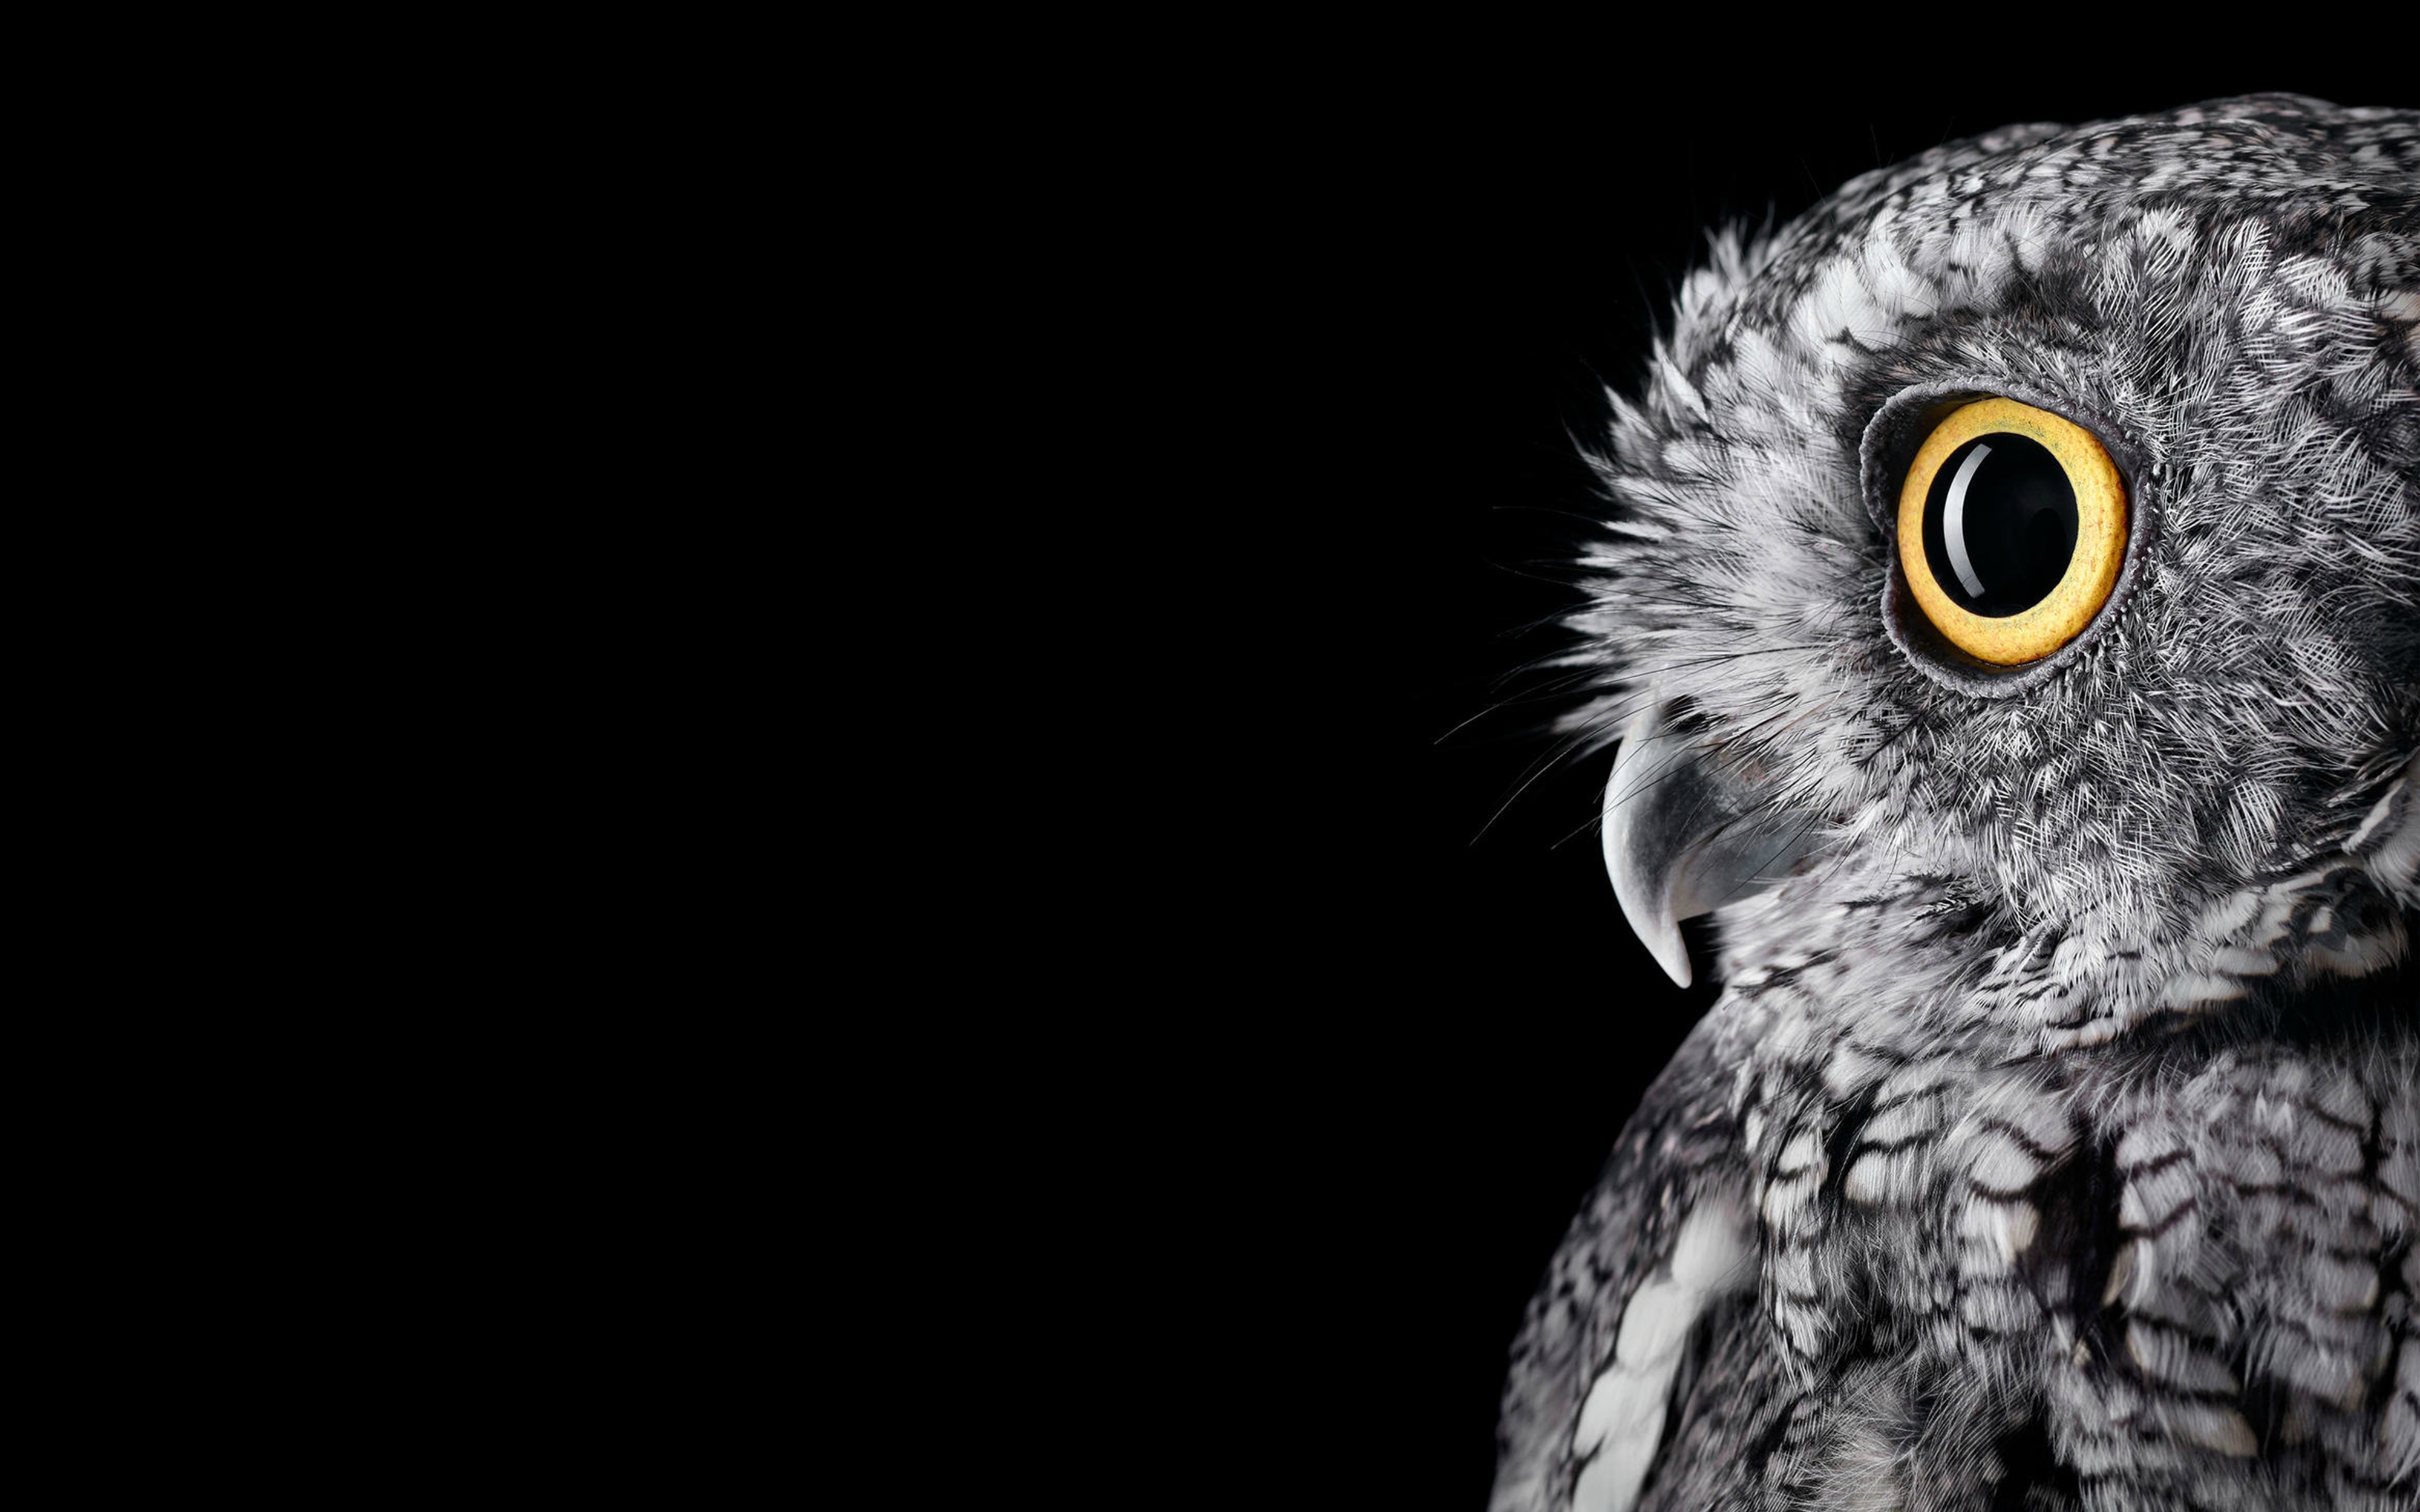 Monochrome photo of an owl